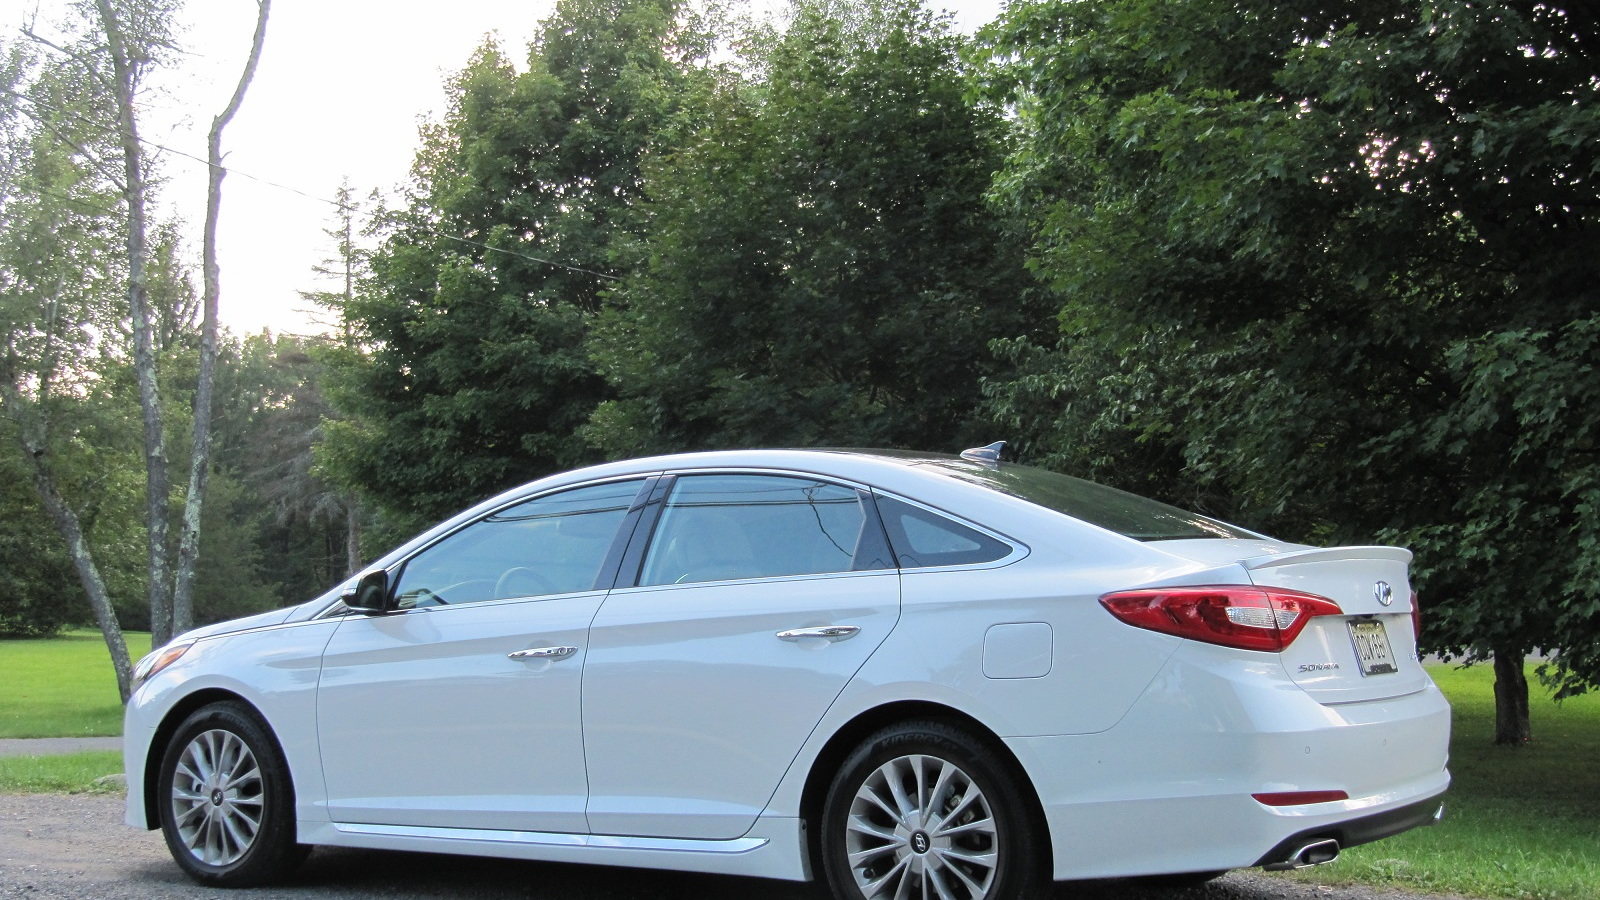 2015 Hyundai Sonata Limited, test drive, Hudson Valley, NY, Aug 2014